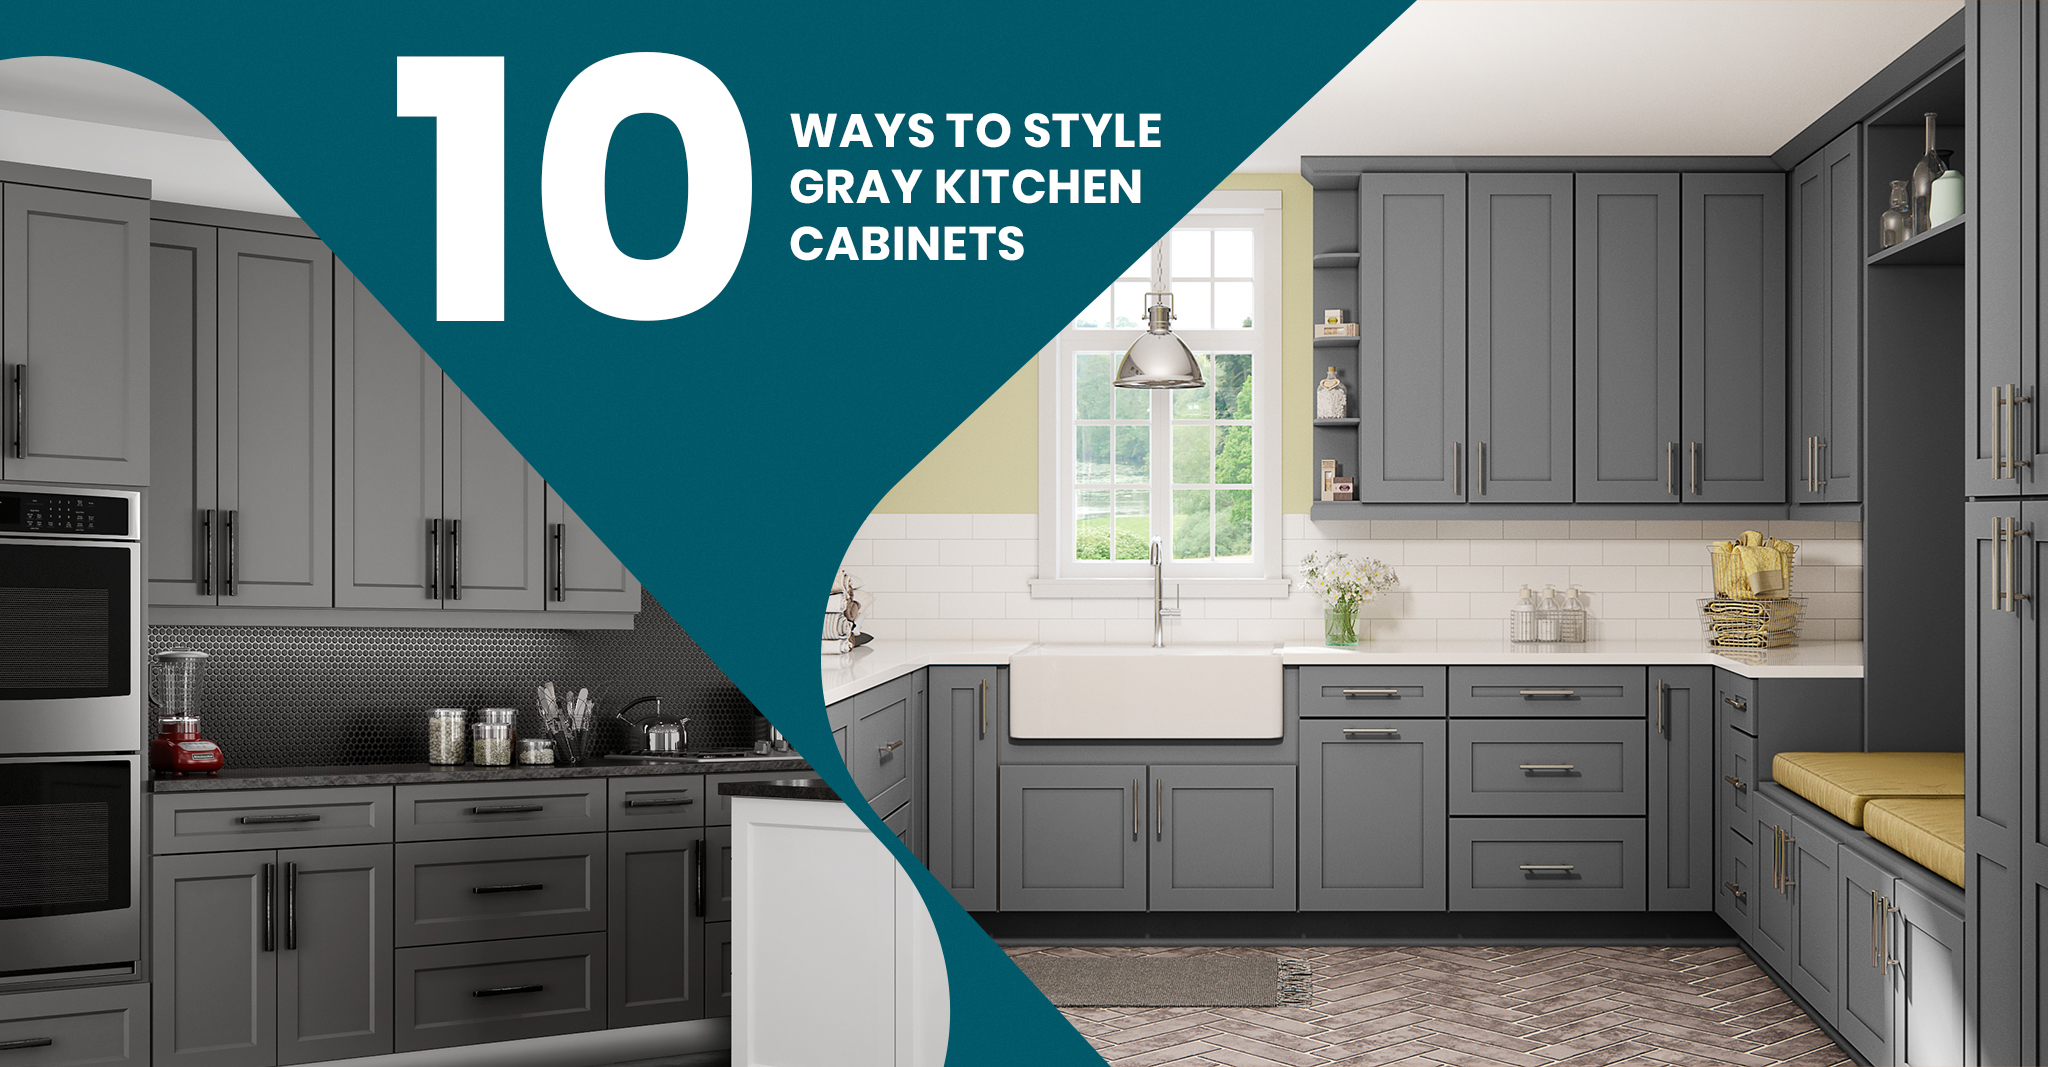 gray kitchen cabinets: 10 stylish design ideas